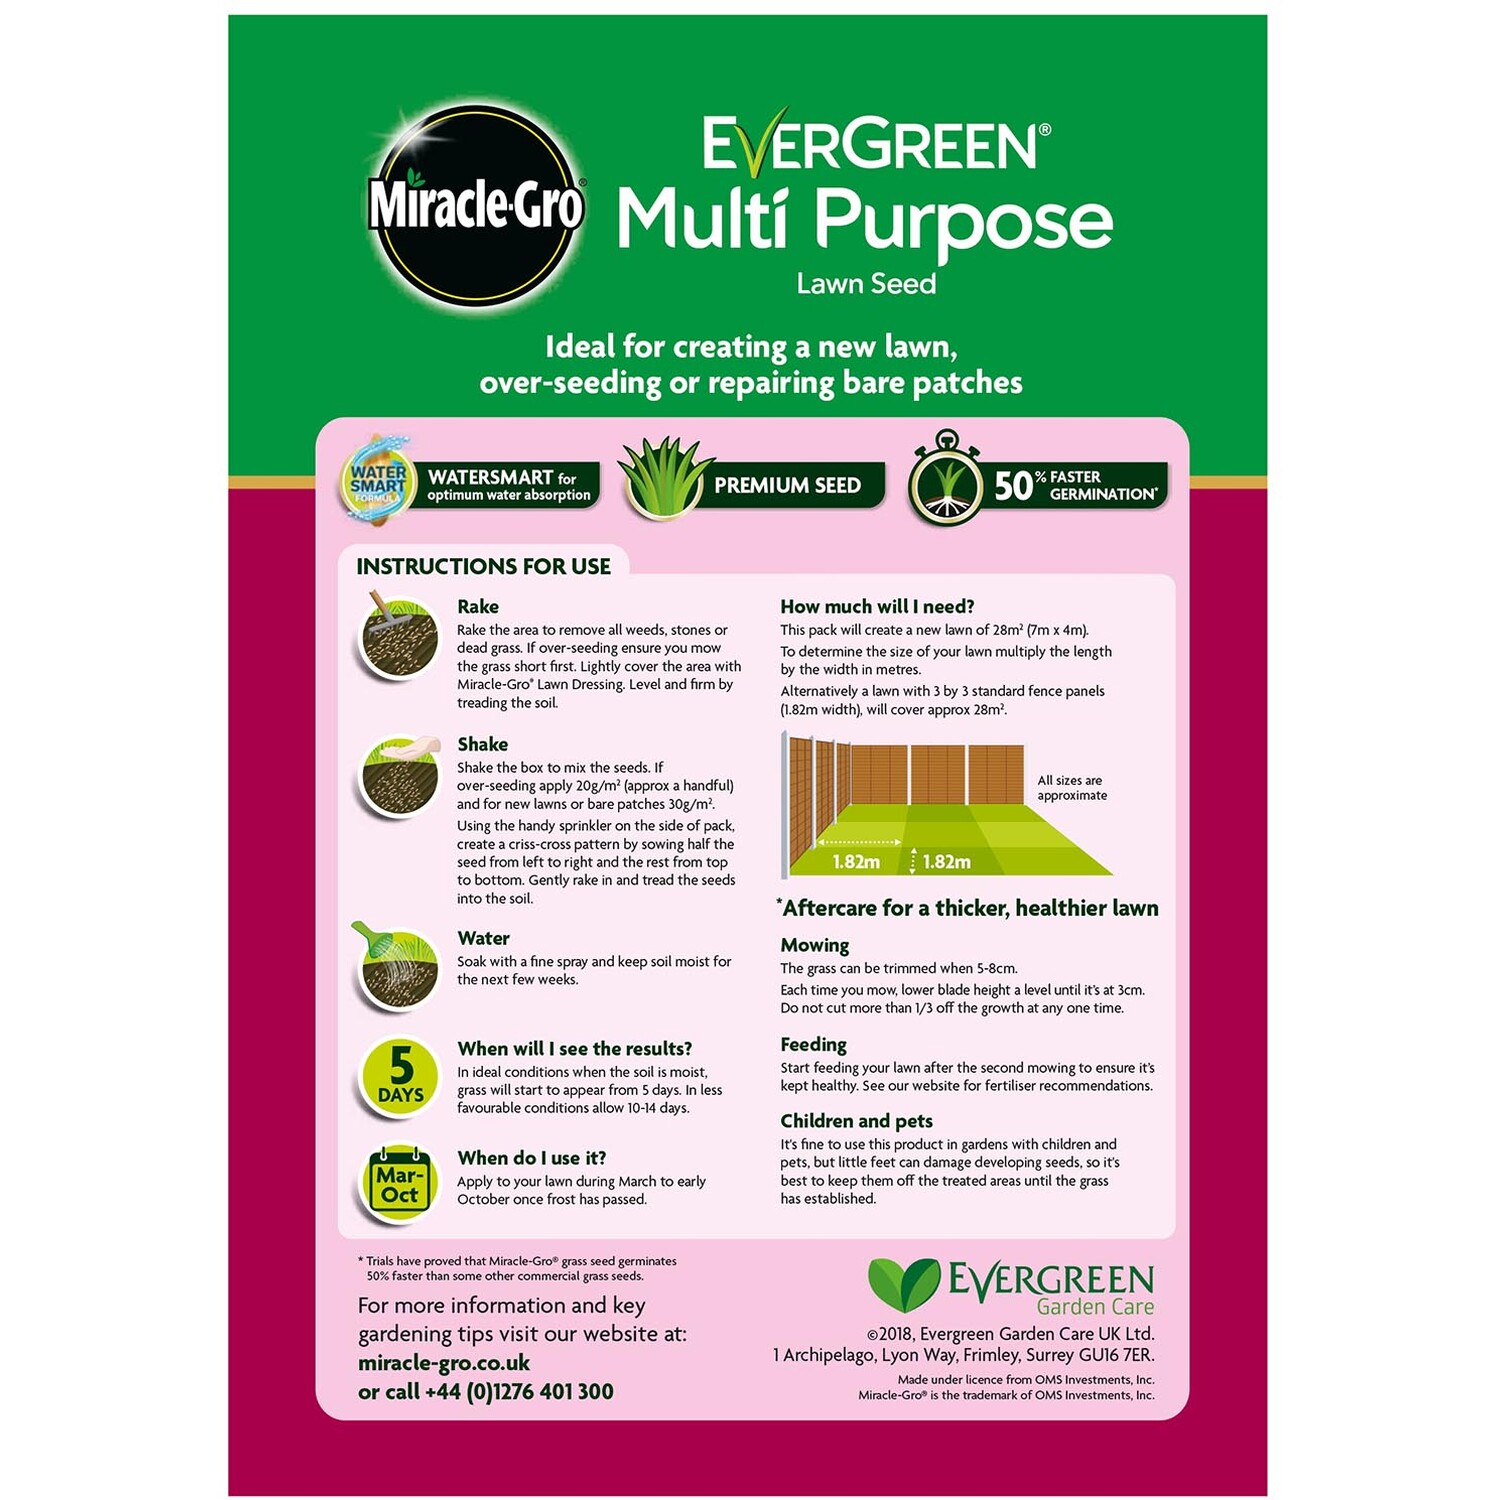 Miracle-Gro Evergreen Multi Purpose Lawn Seed Image 2